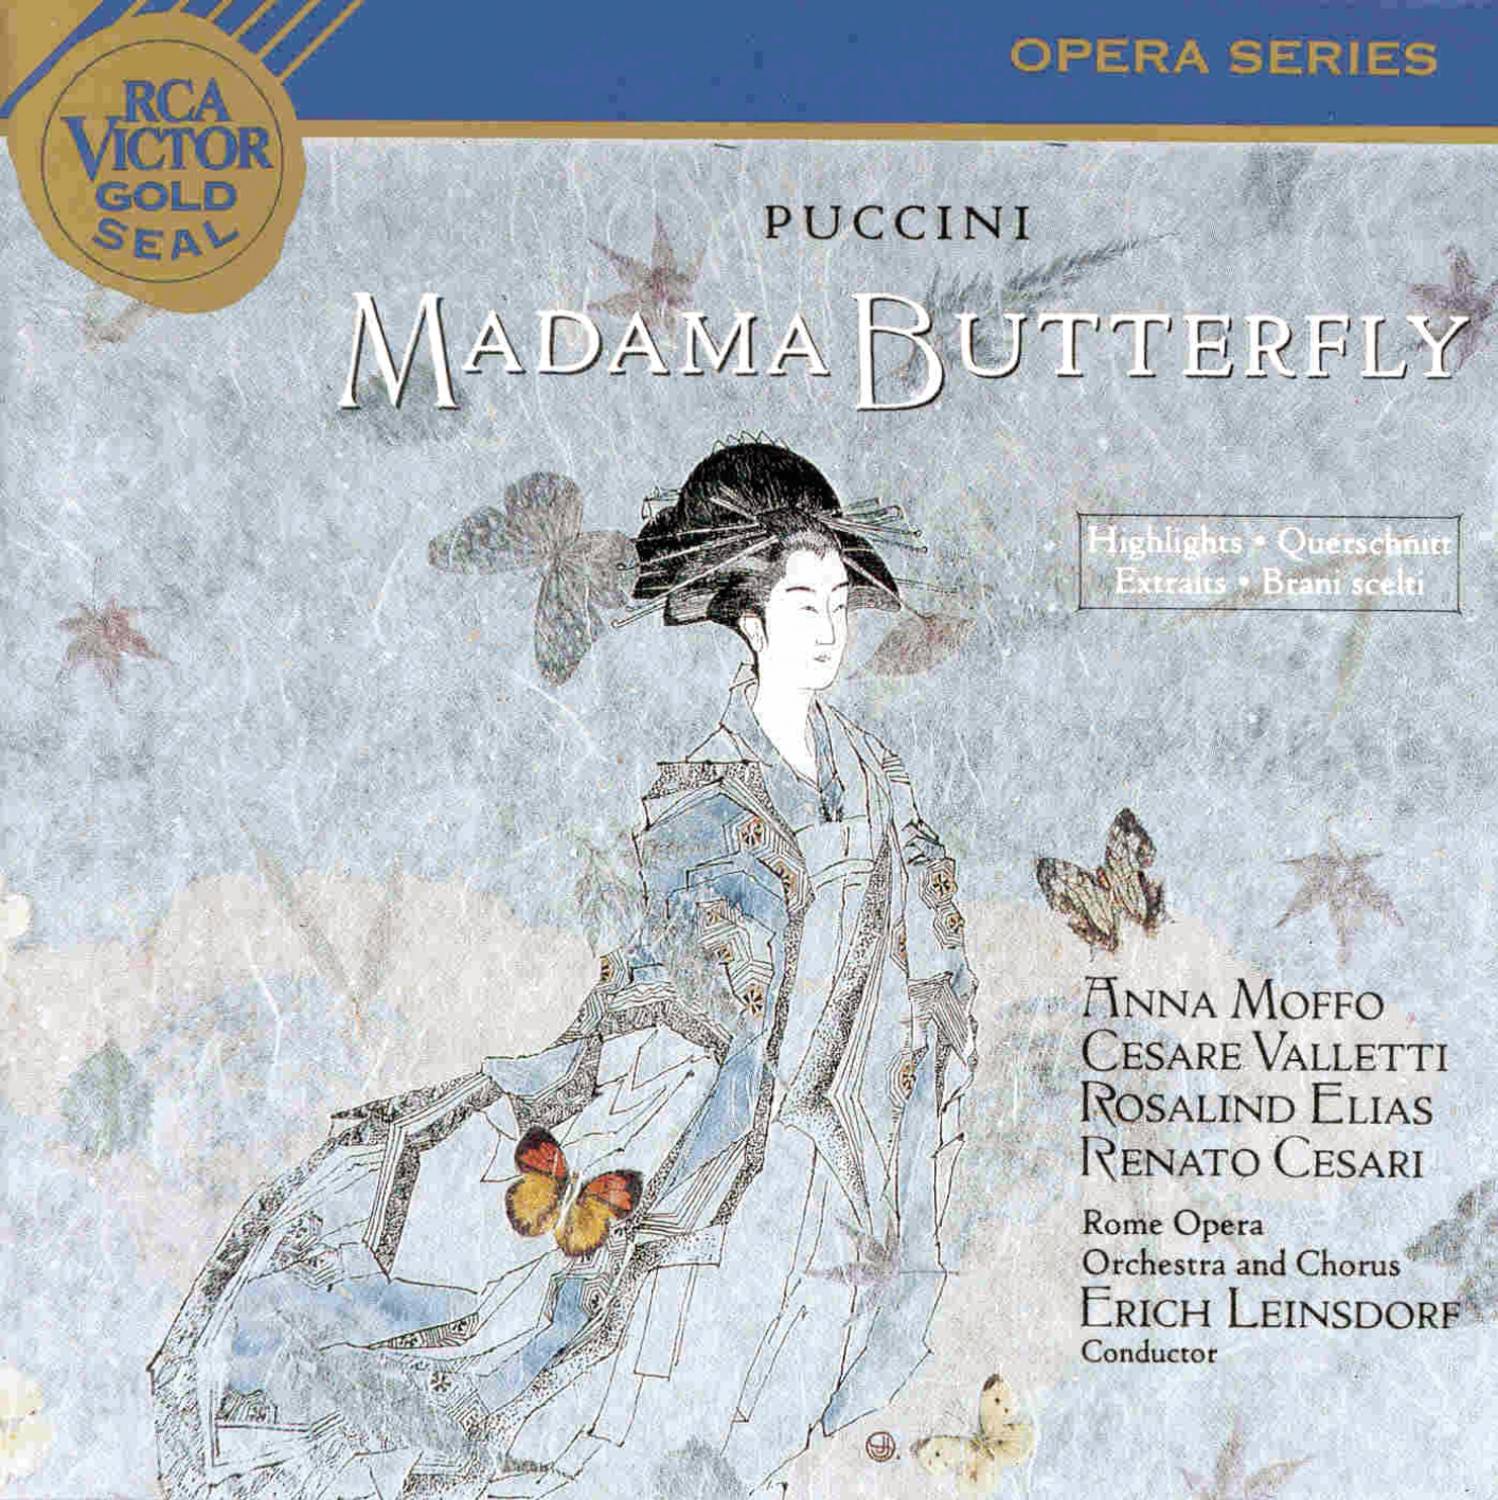 Madama Butterfly: Bimba, bimba, non piangere (Love Duet)